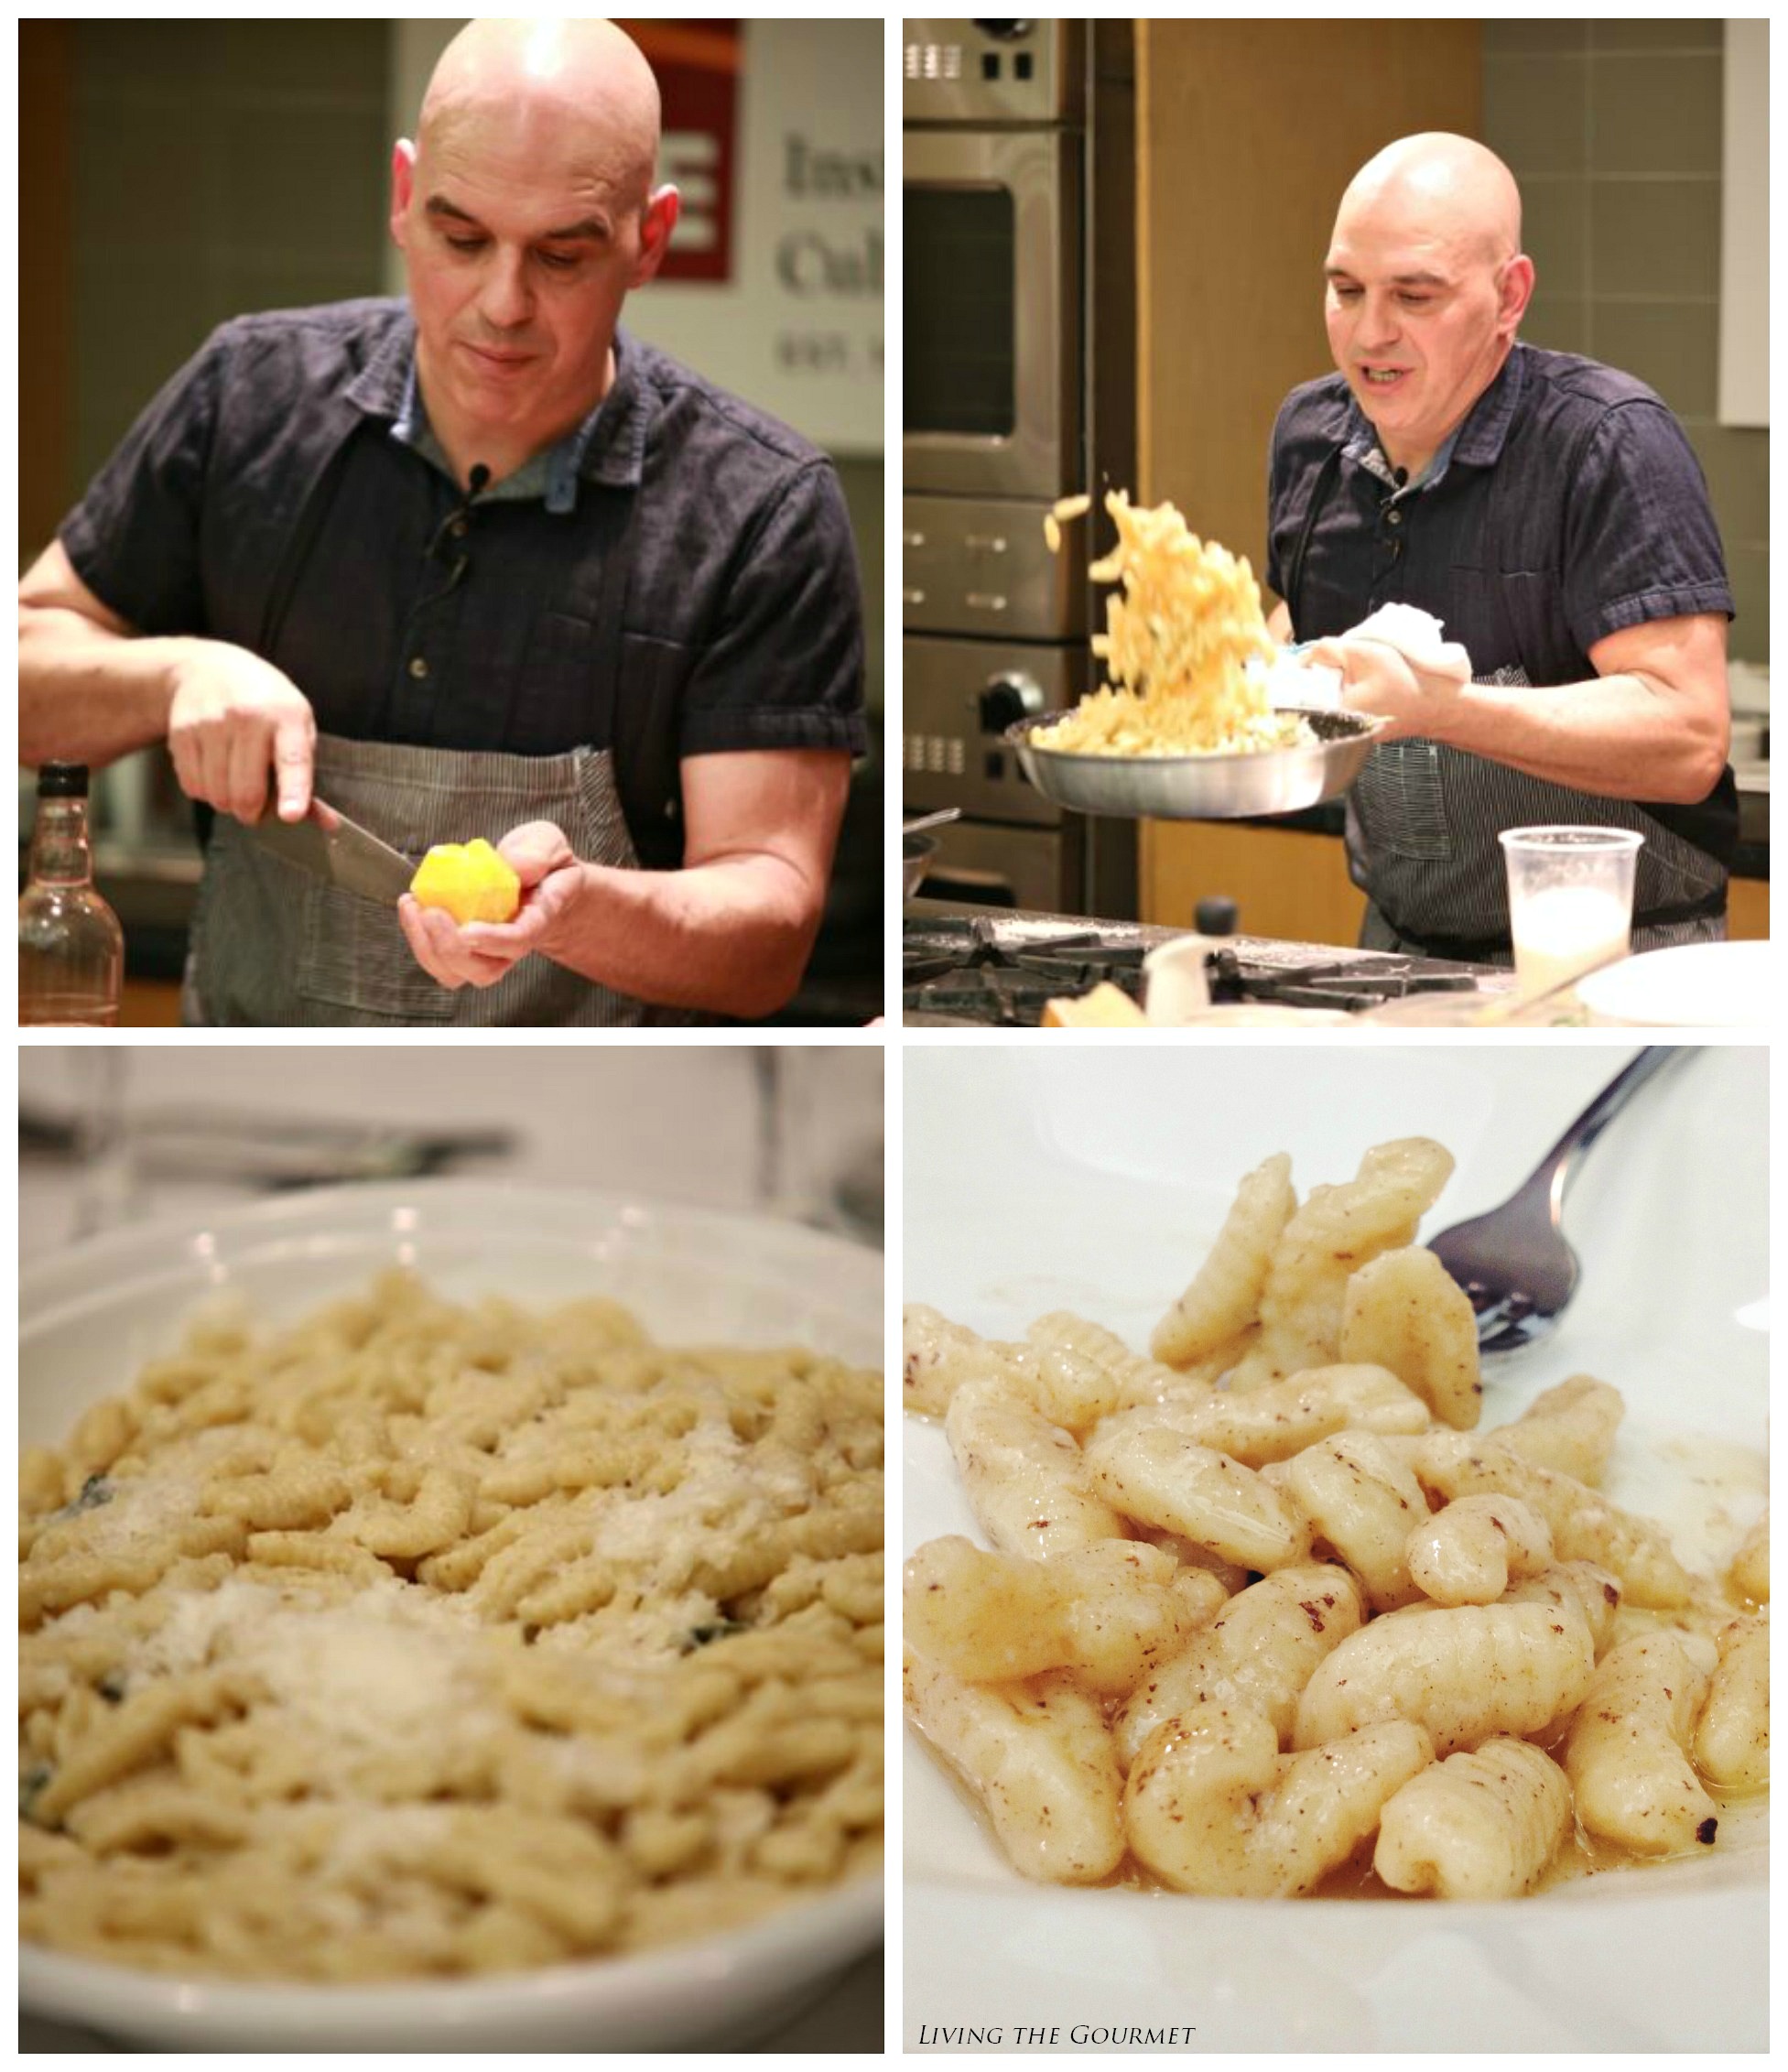 Living the Gourmet: Chef Michael Symon & BlueStar at ICE